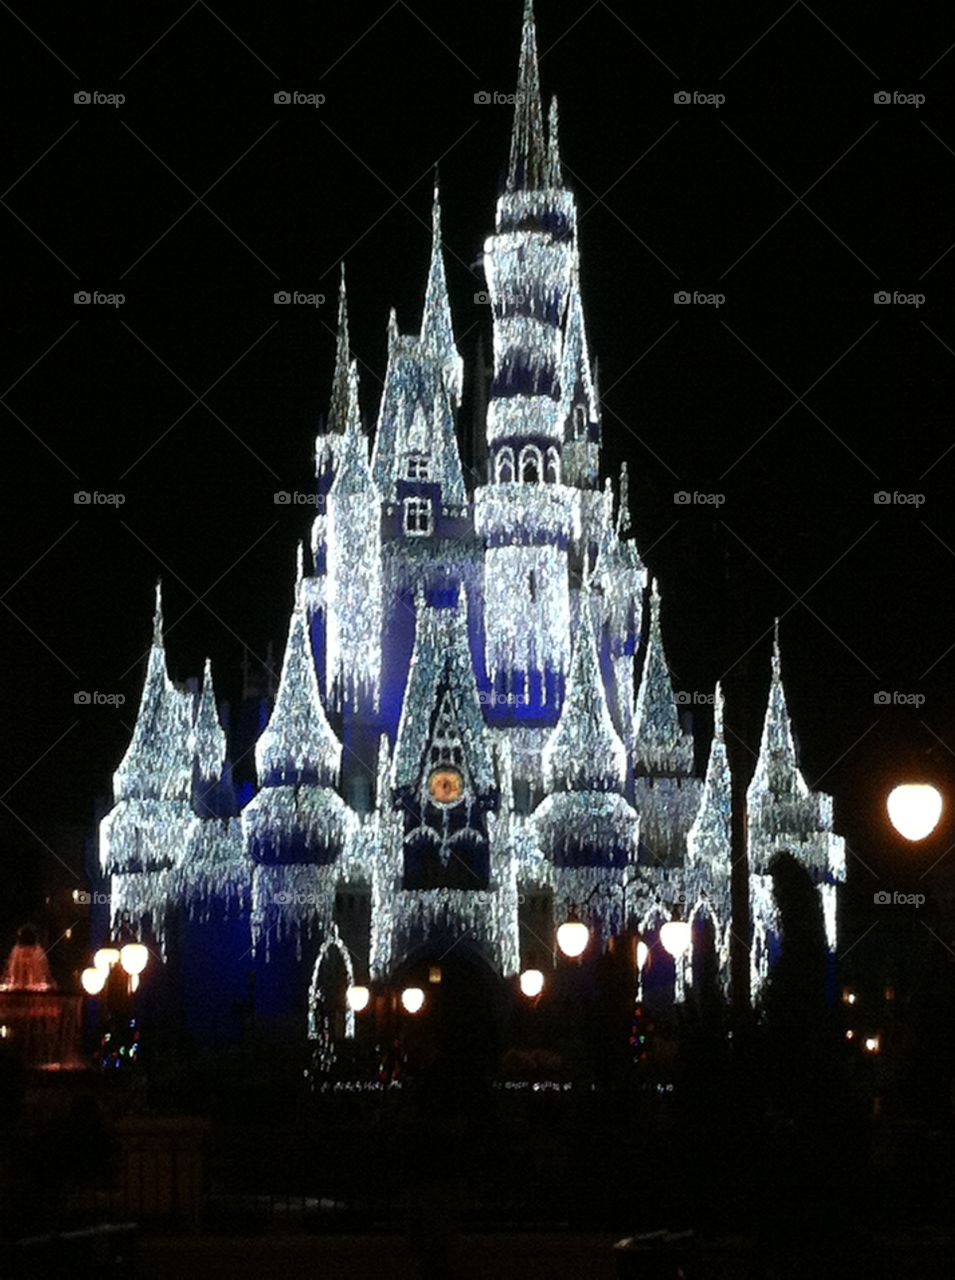 Walt Disney world Castle. The castle in Ice lights, Christmas Party.
